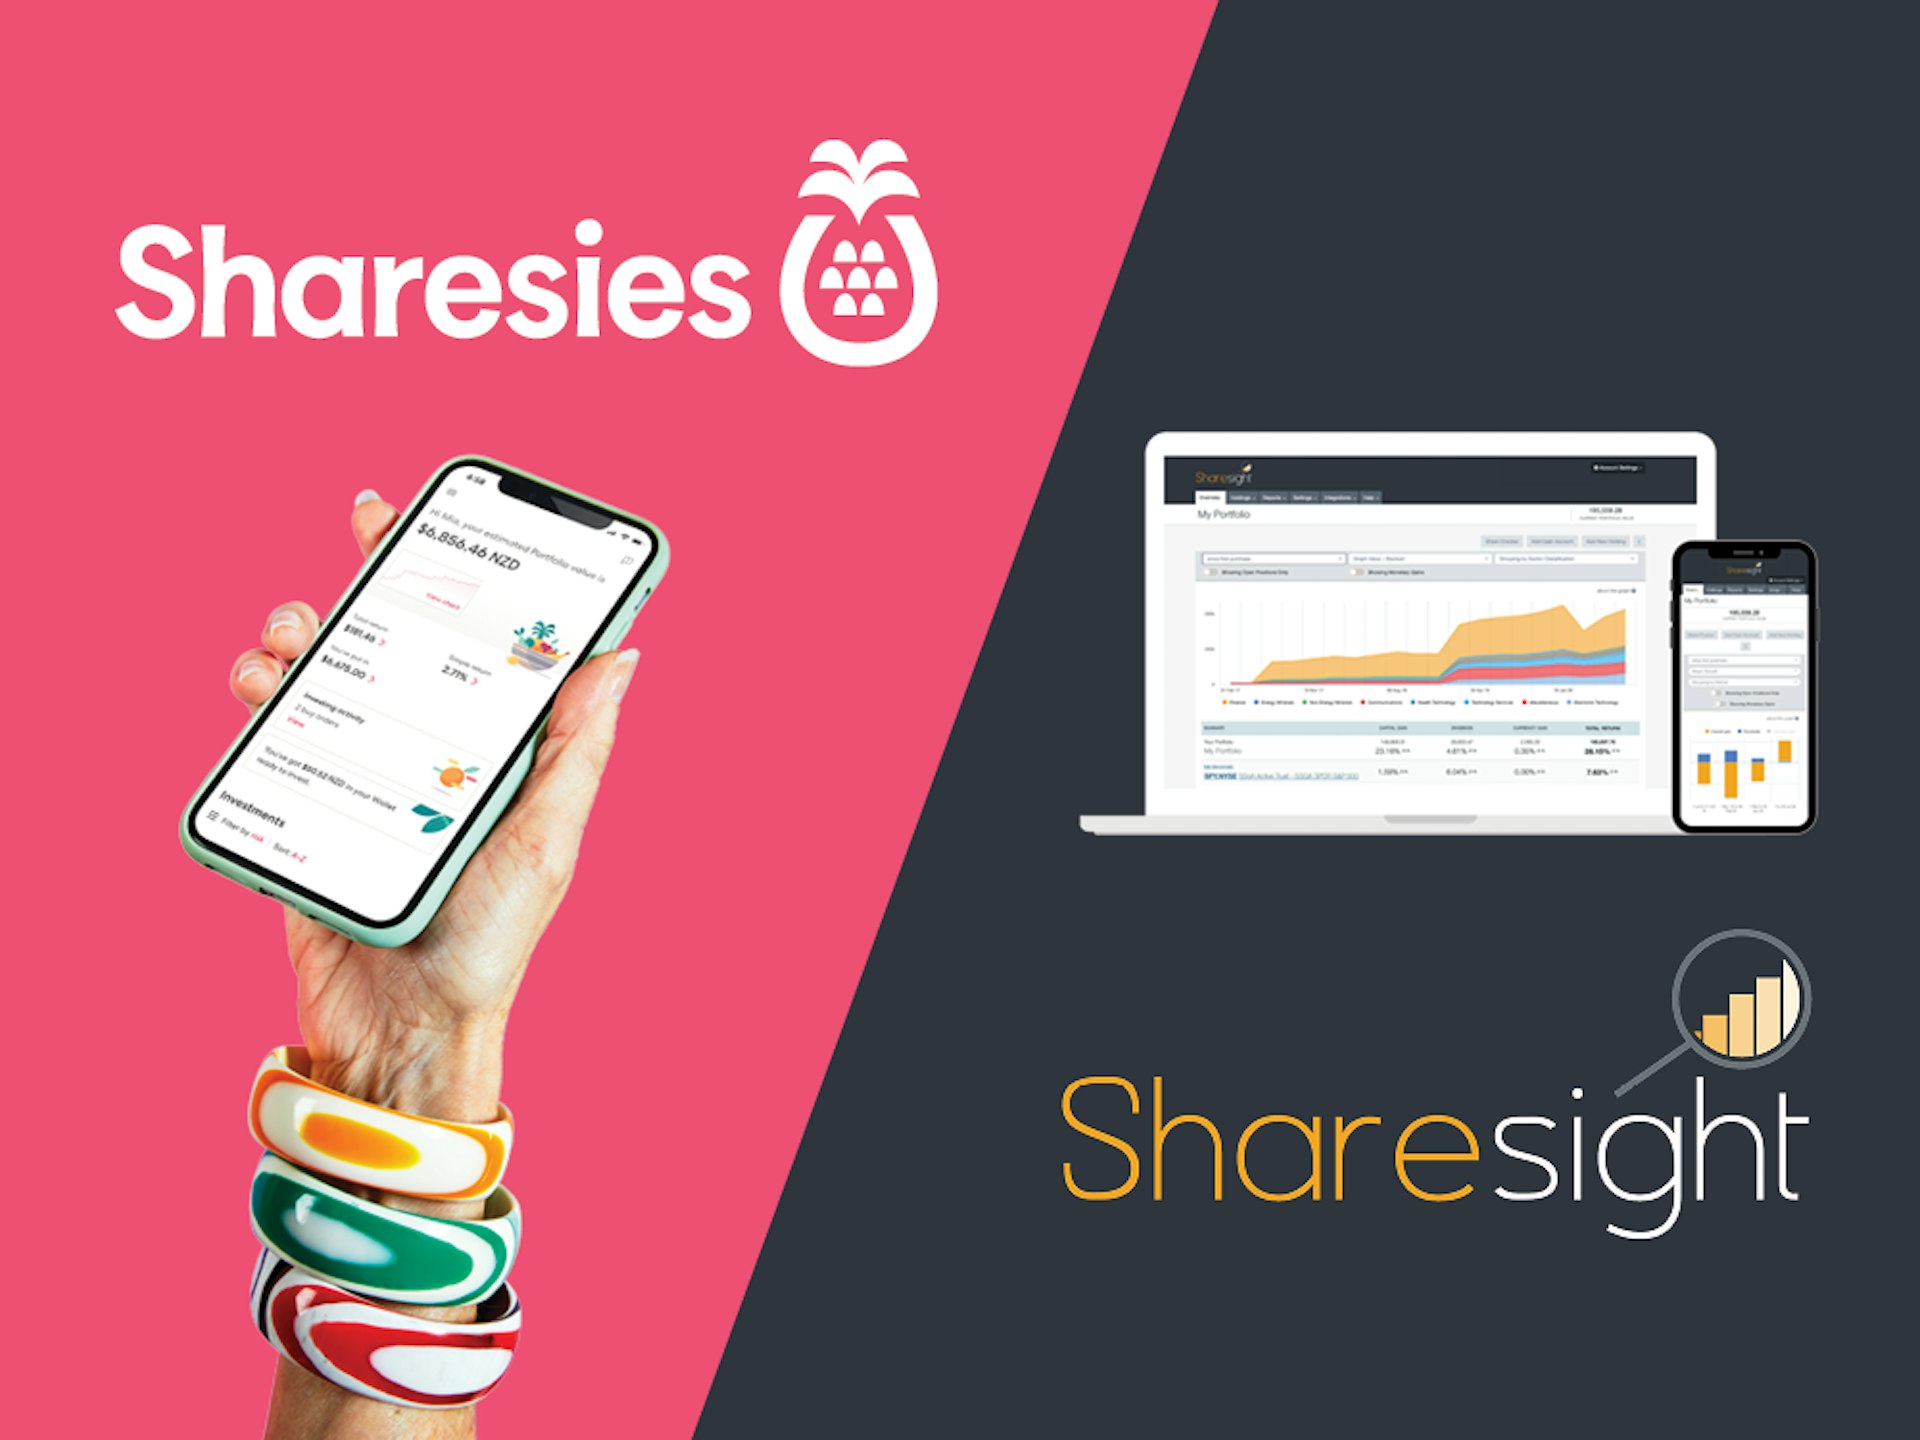 Sharesies and Sharesight logos.